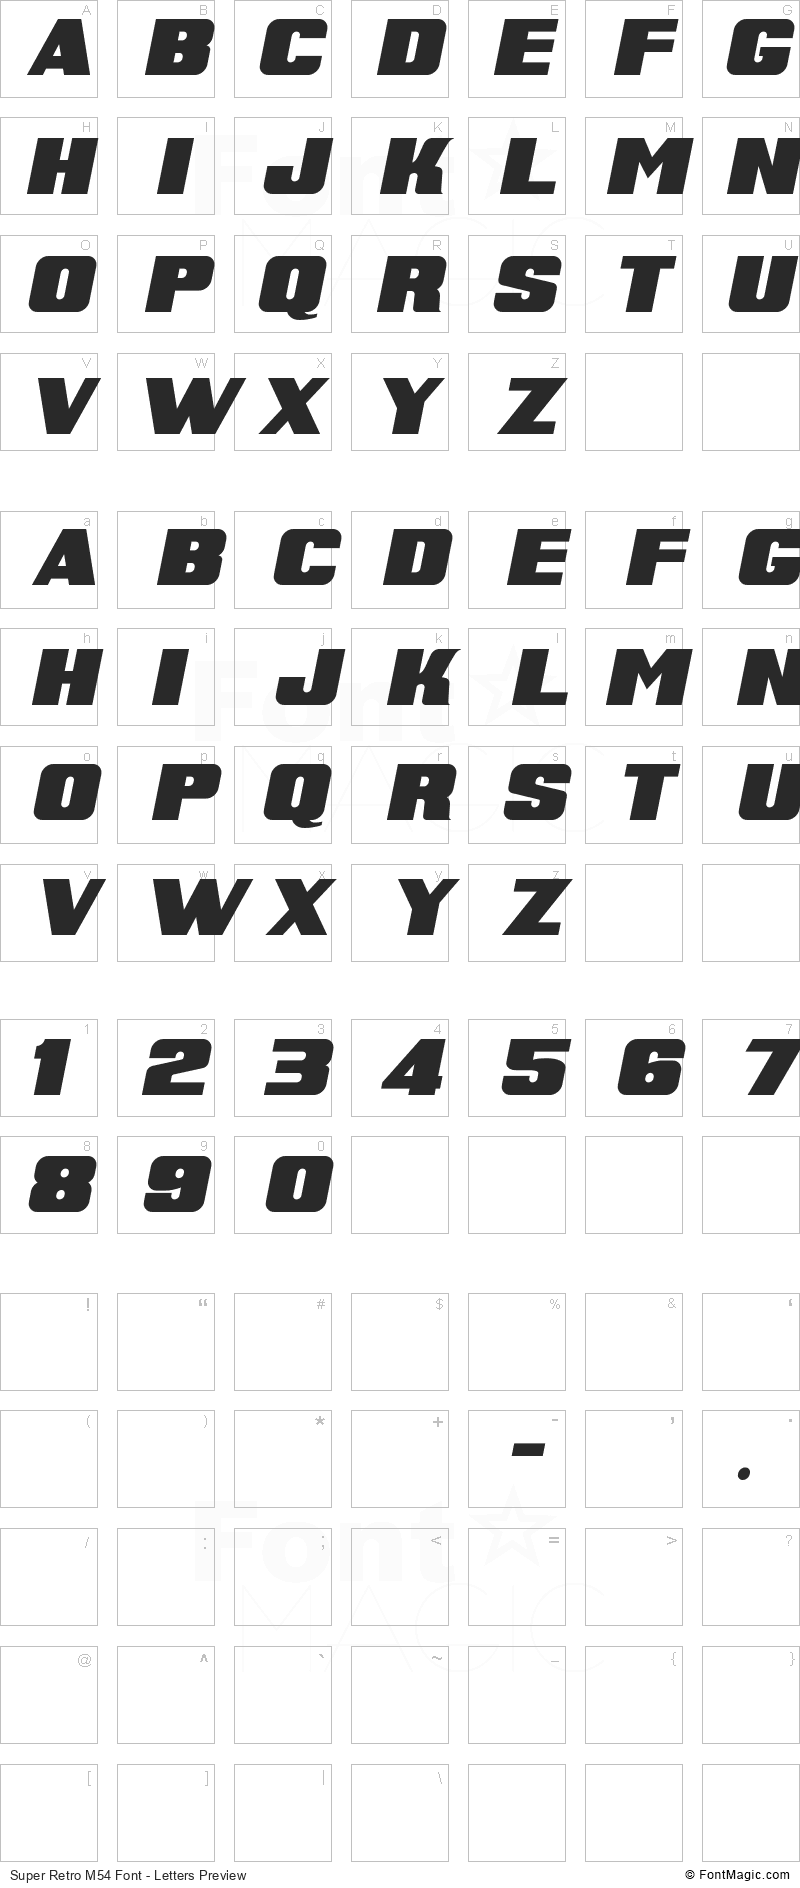 Super Retro M54 Font - All Latters Preview Chart